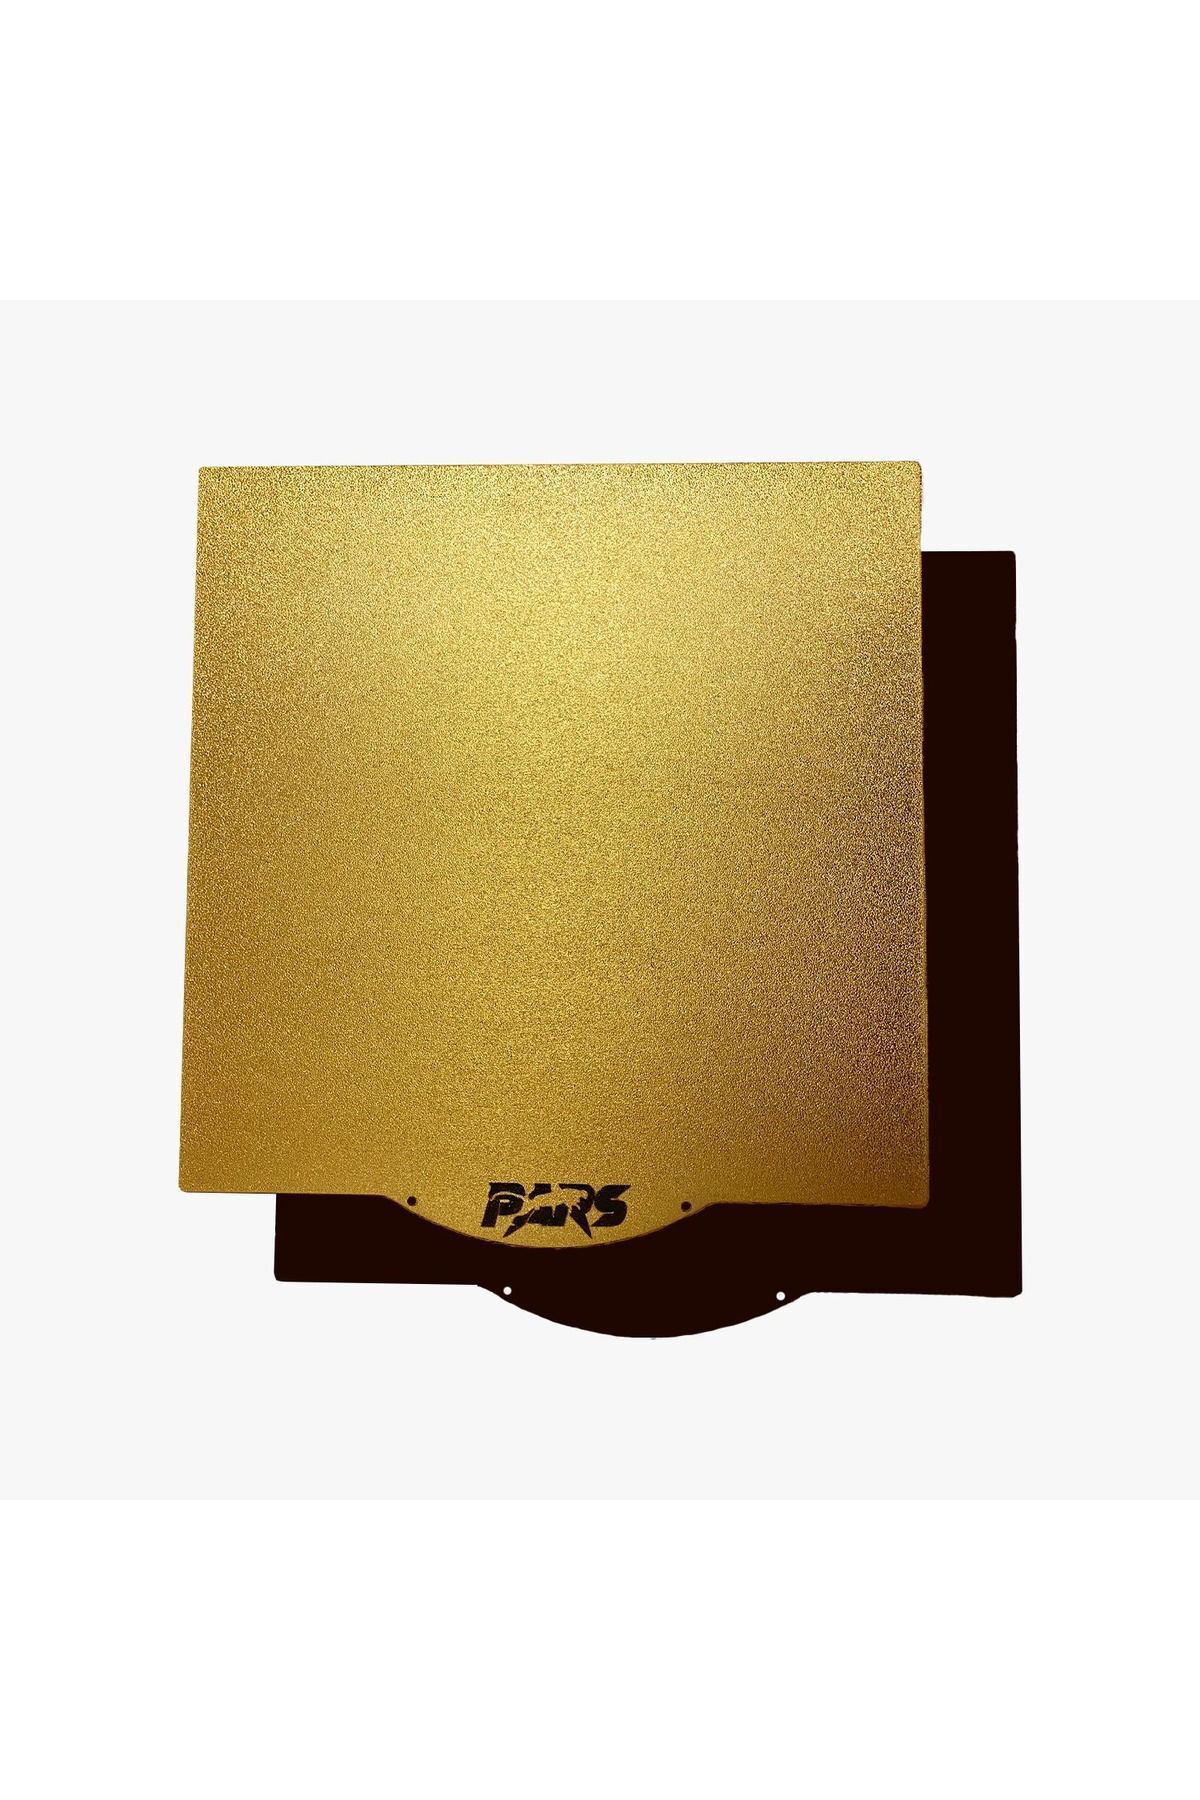 Pars 190x190 MM Pars Gold Pei Kaplı Özel Yay Çeliği Tabla Magnetli